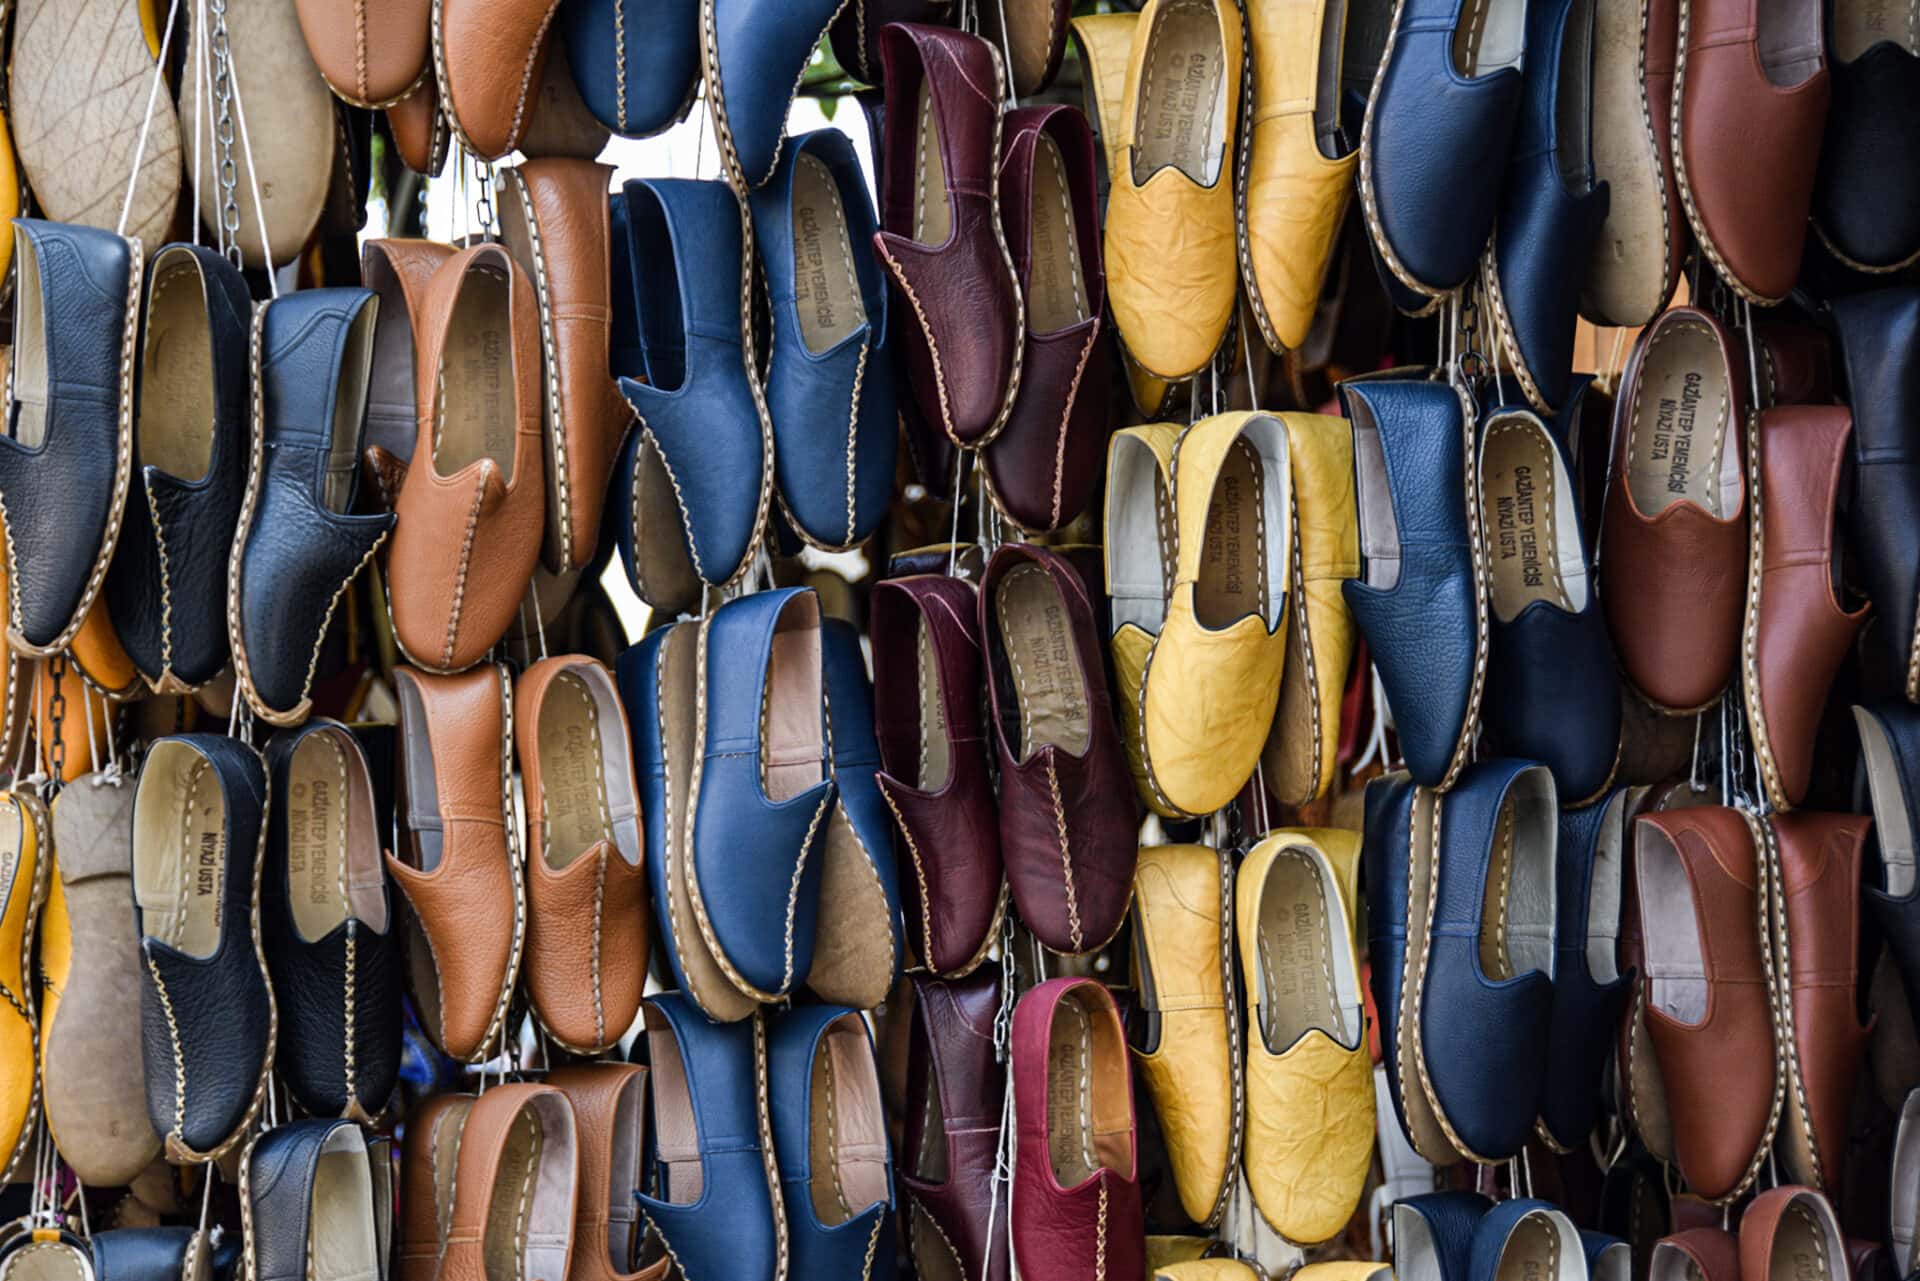 colourful "Yemeni" sandals at a shop in Gazianteps bazaar